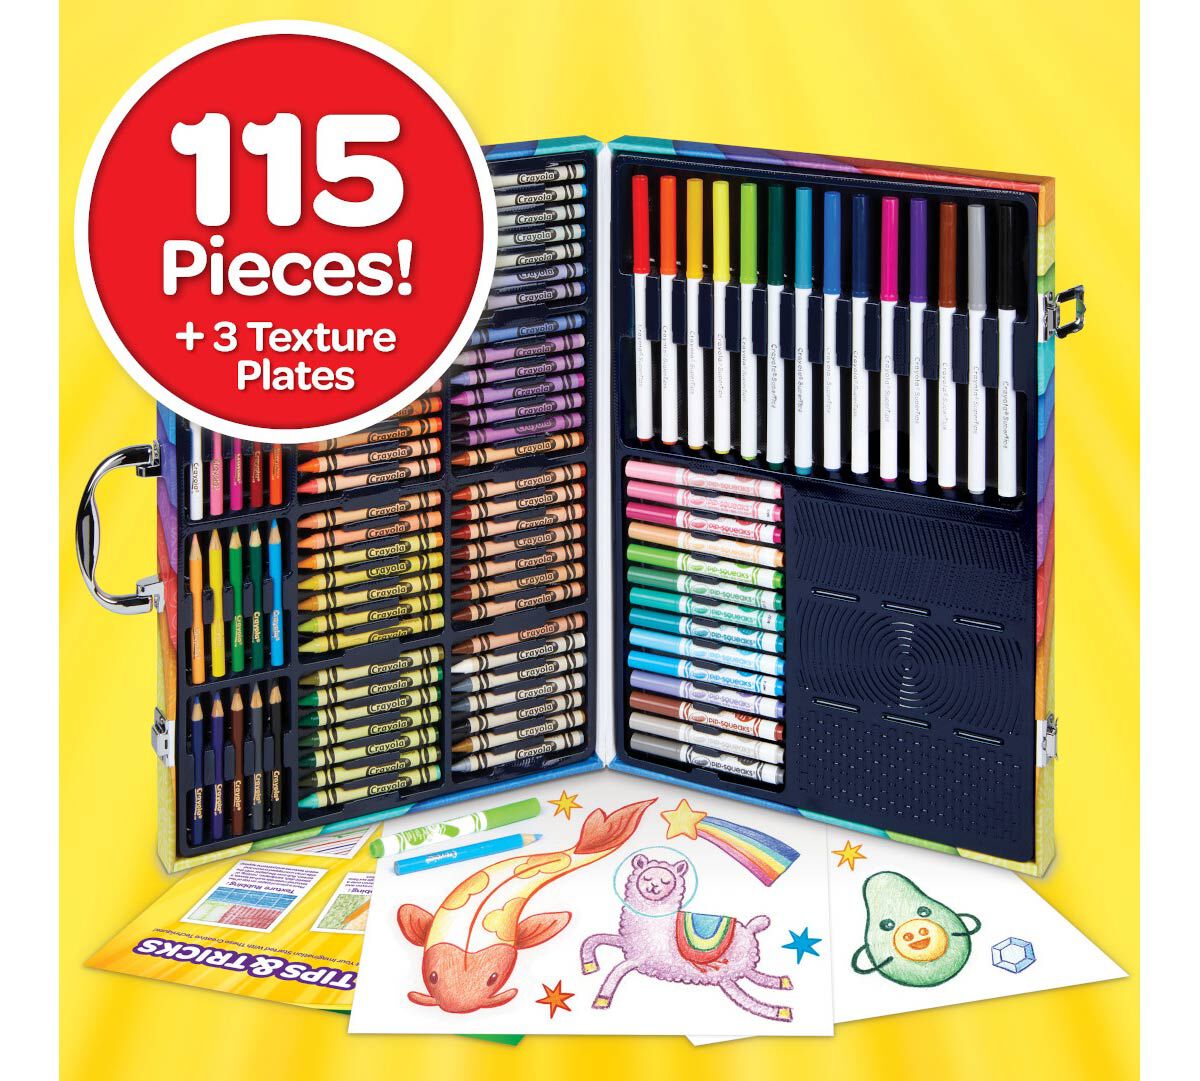 Crayola Inspiration Art Case Coloring Set 115 Pieces Art Set for Kids 